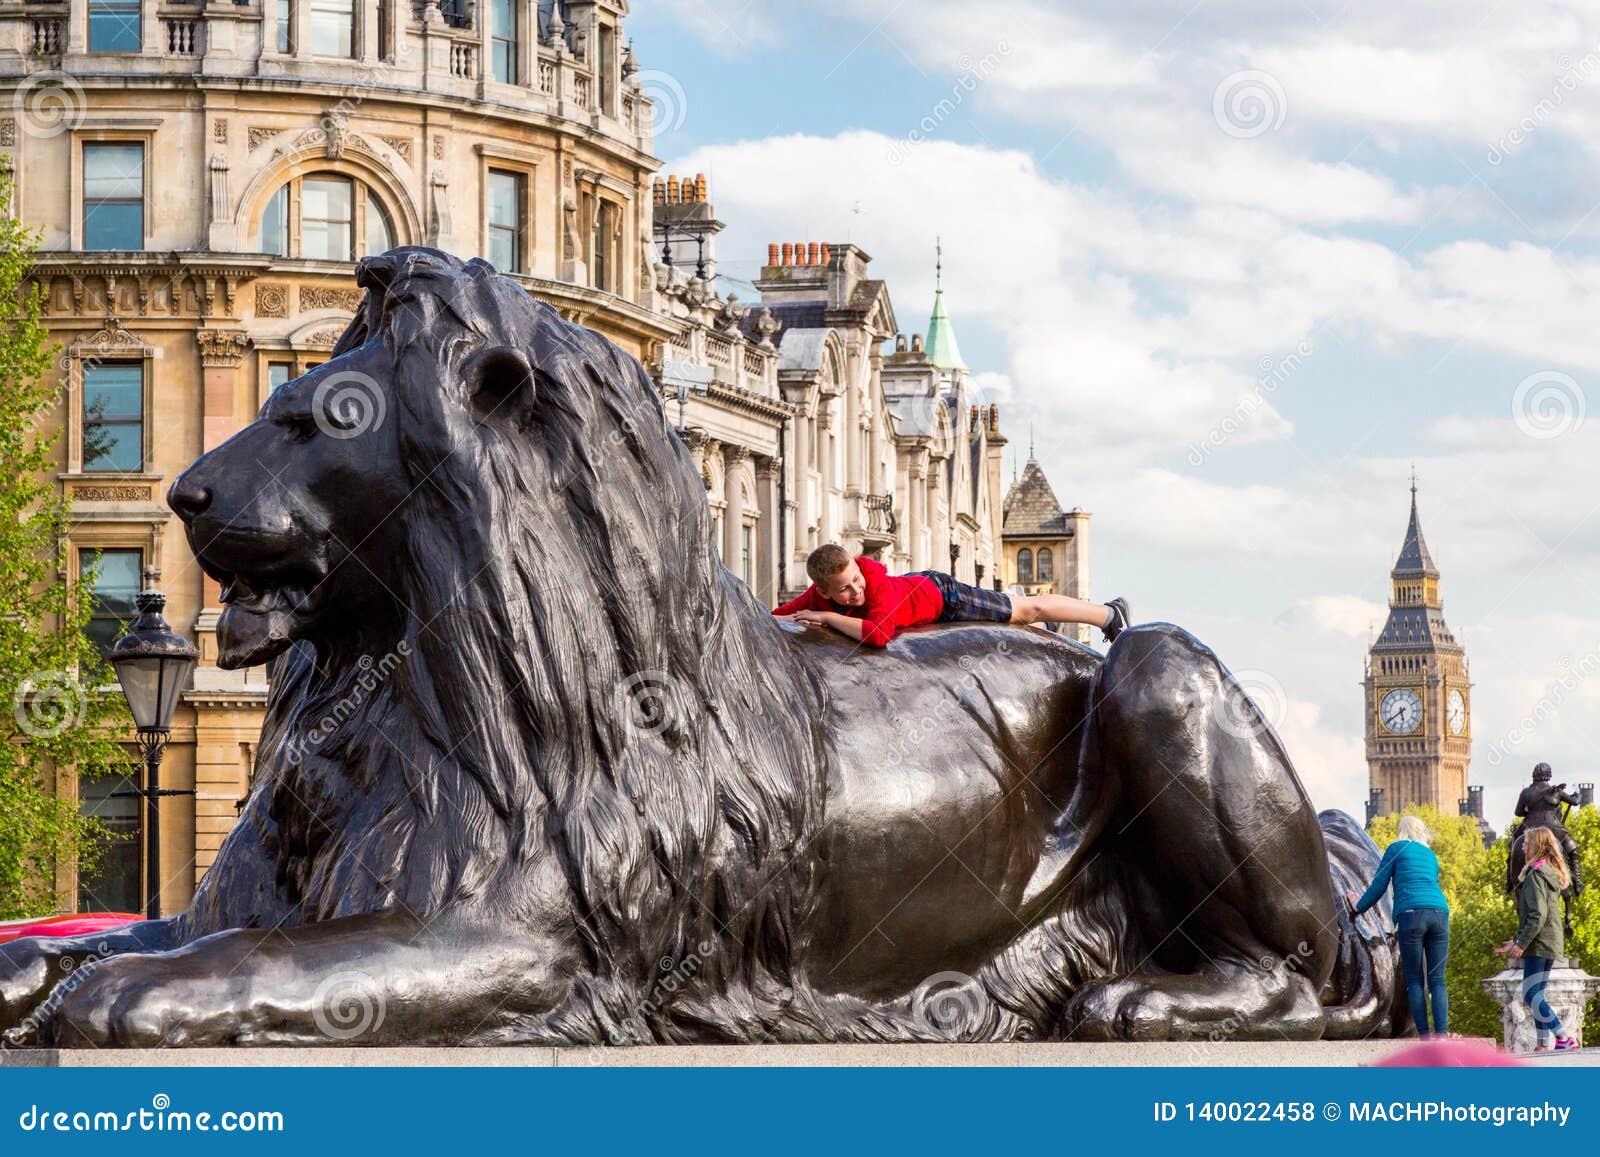 Trafalgar Square Lion editorial stock photo. Image of britain - 140022458